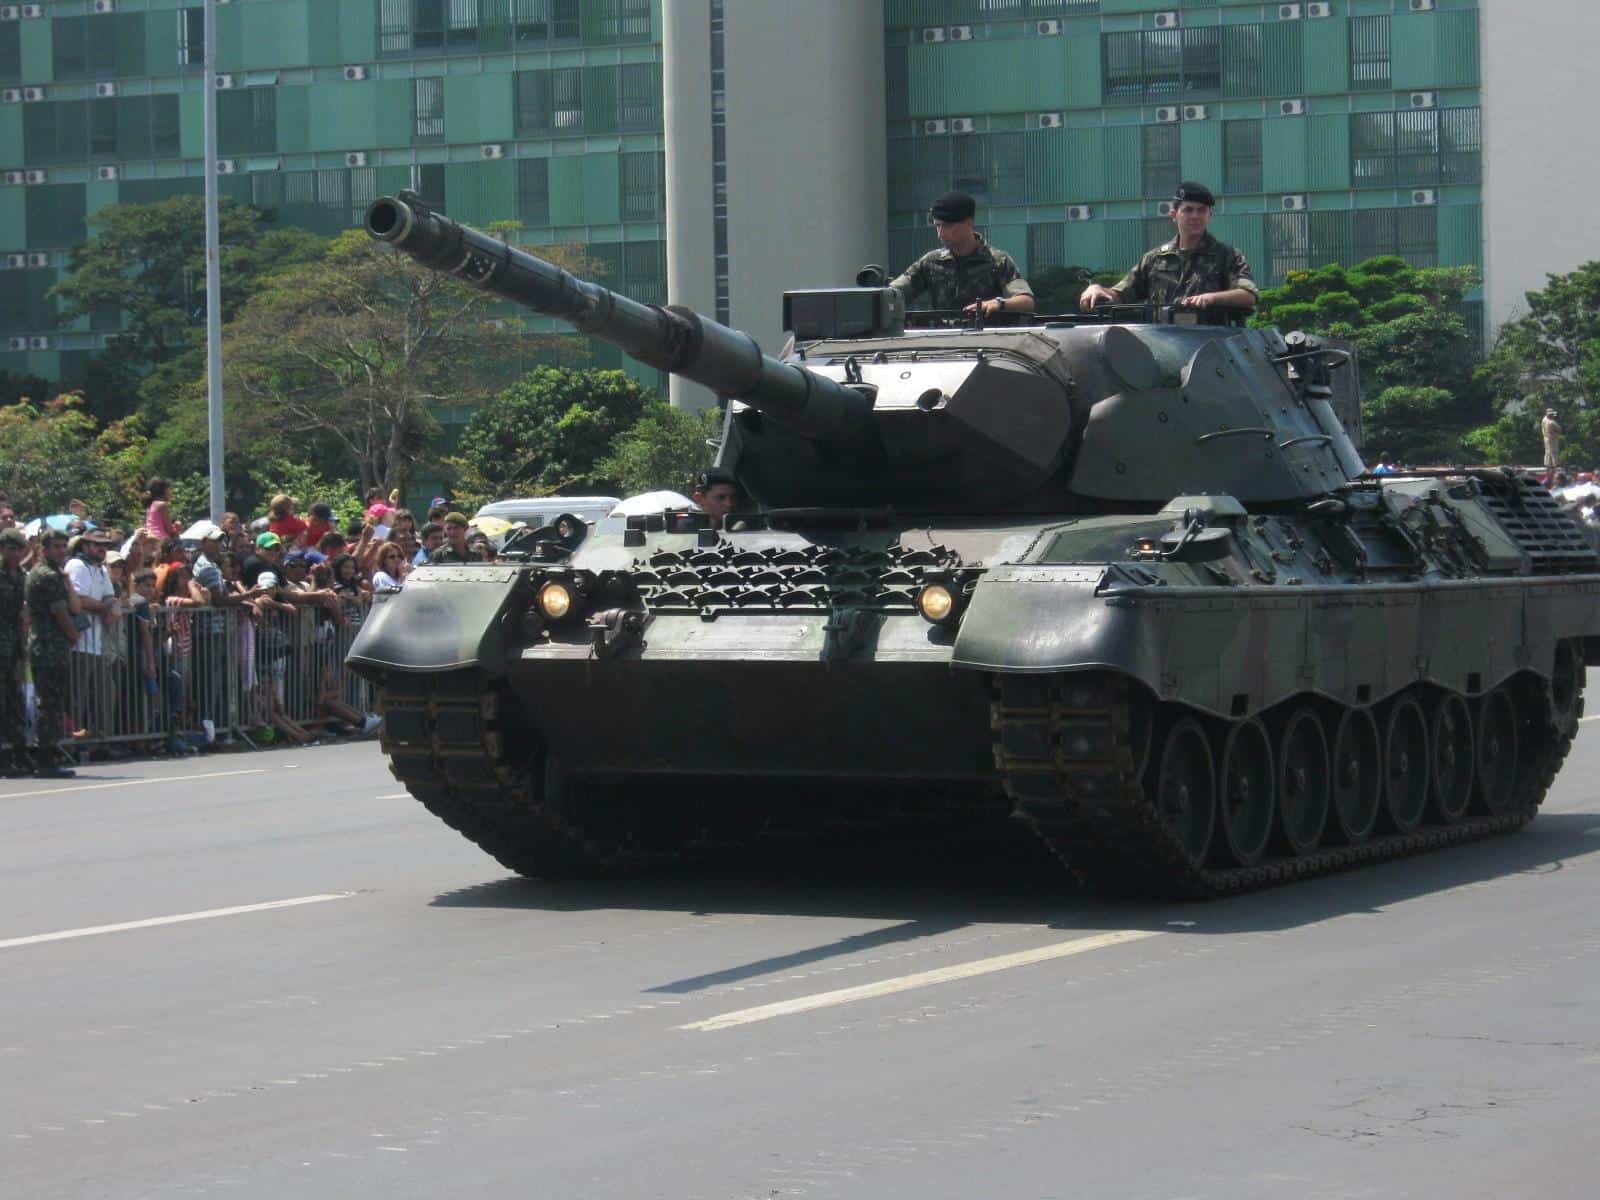 Brazilian Leopard 1 tank by Jorge Andrade from Rio de Janeiro, Brazil